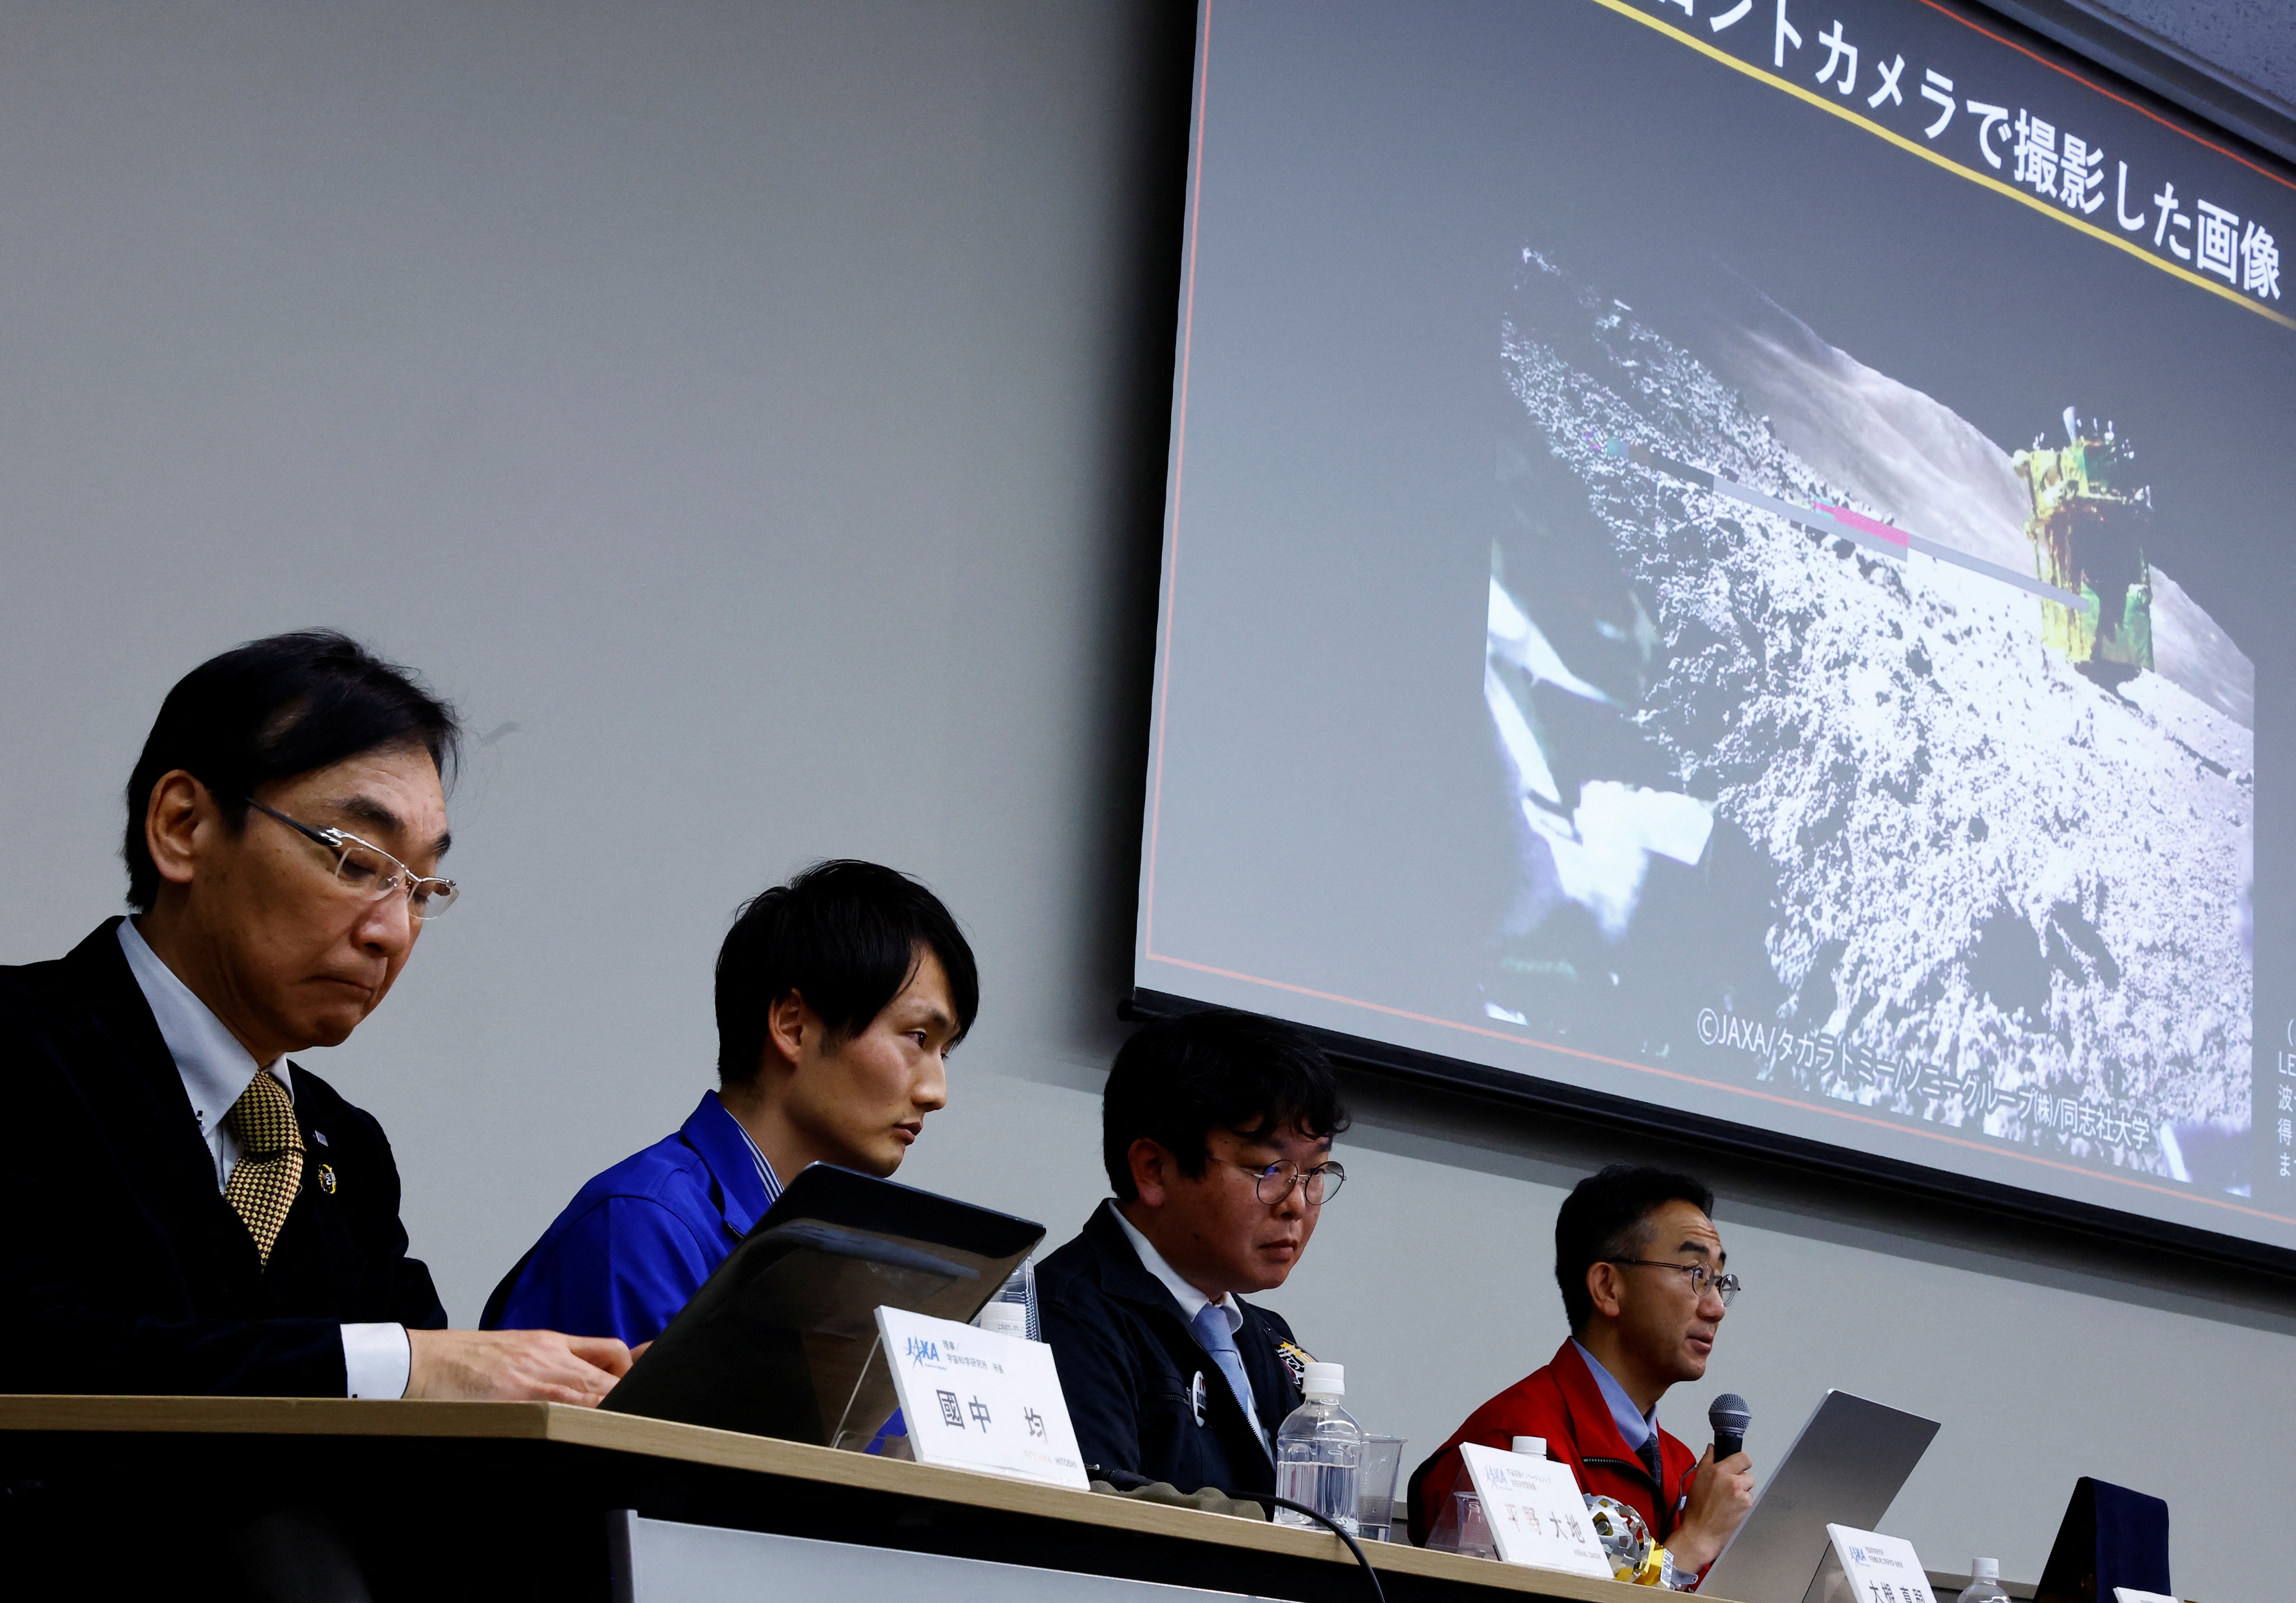 Hitoshi Kuninaka, Daichi Hirano, Masatsugu Otsuki and Shinichiro Sakai of JAXA sit in front of a screen showing an image taken by LEV-2 on the moon, during a press conference on SLIM's moon landing mission in Tokyo, Japan, January 25, 2024 (Image: Reuters)